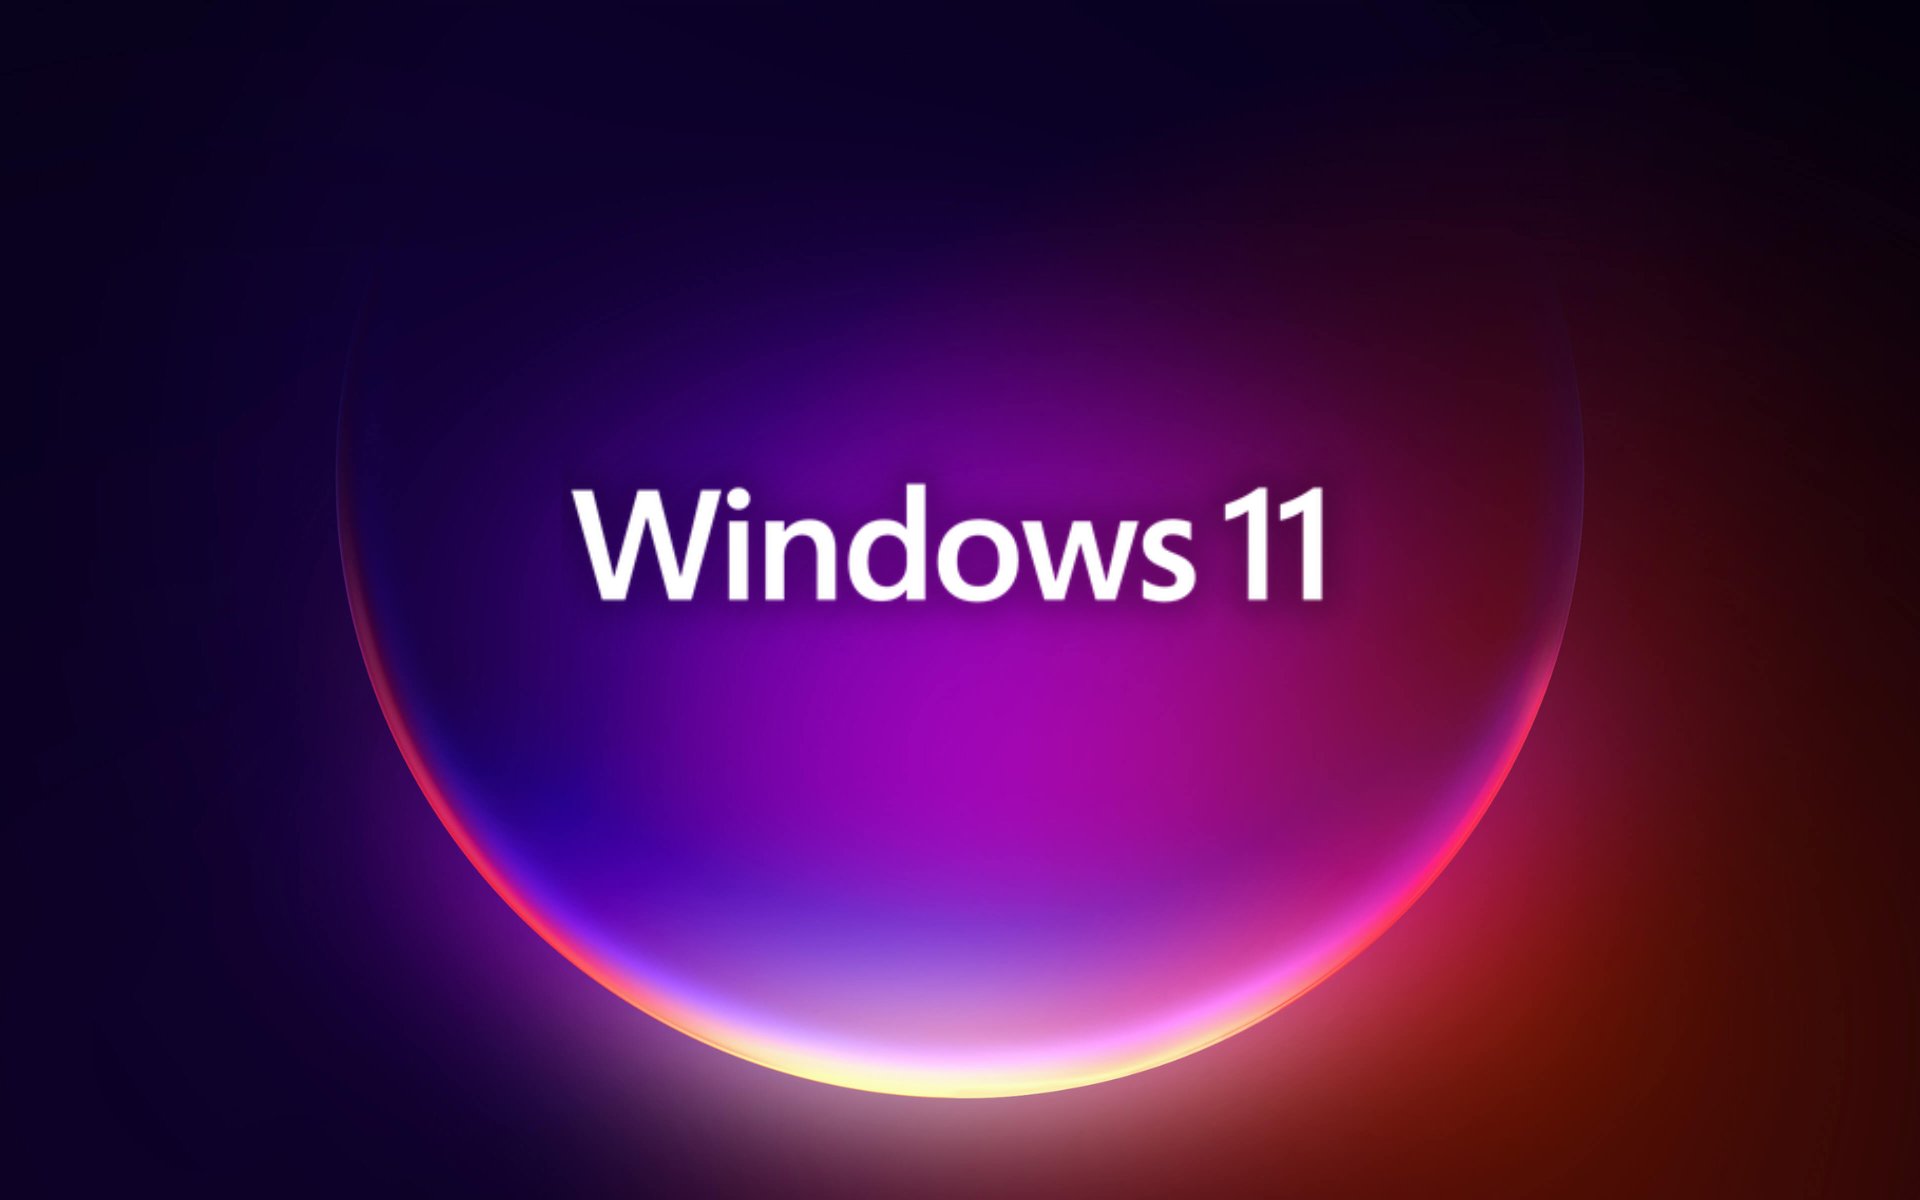 windows 11 beta